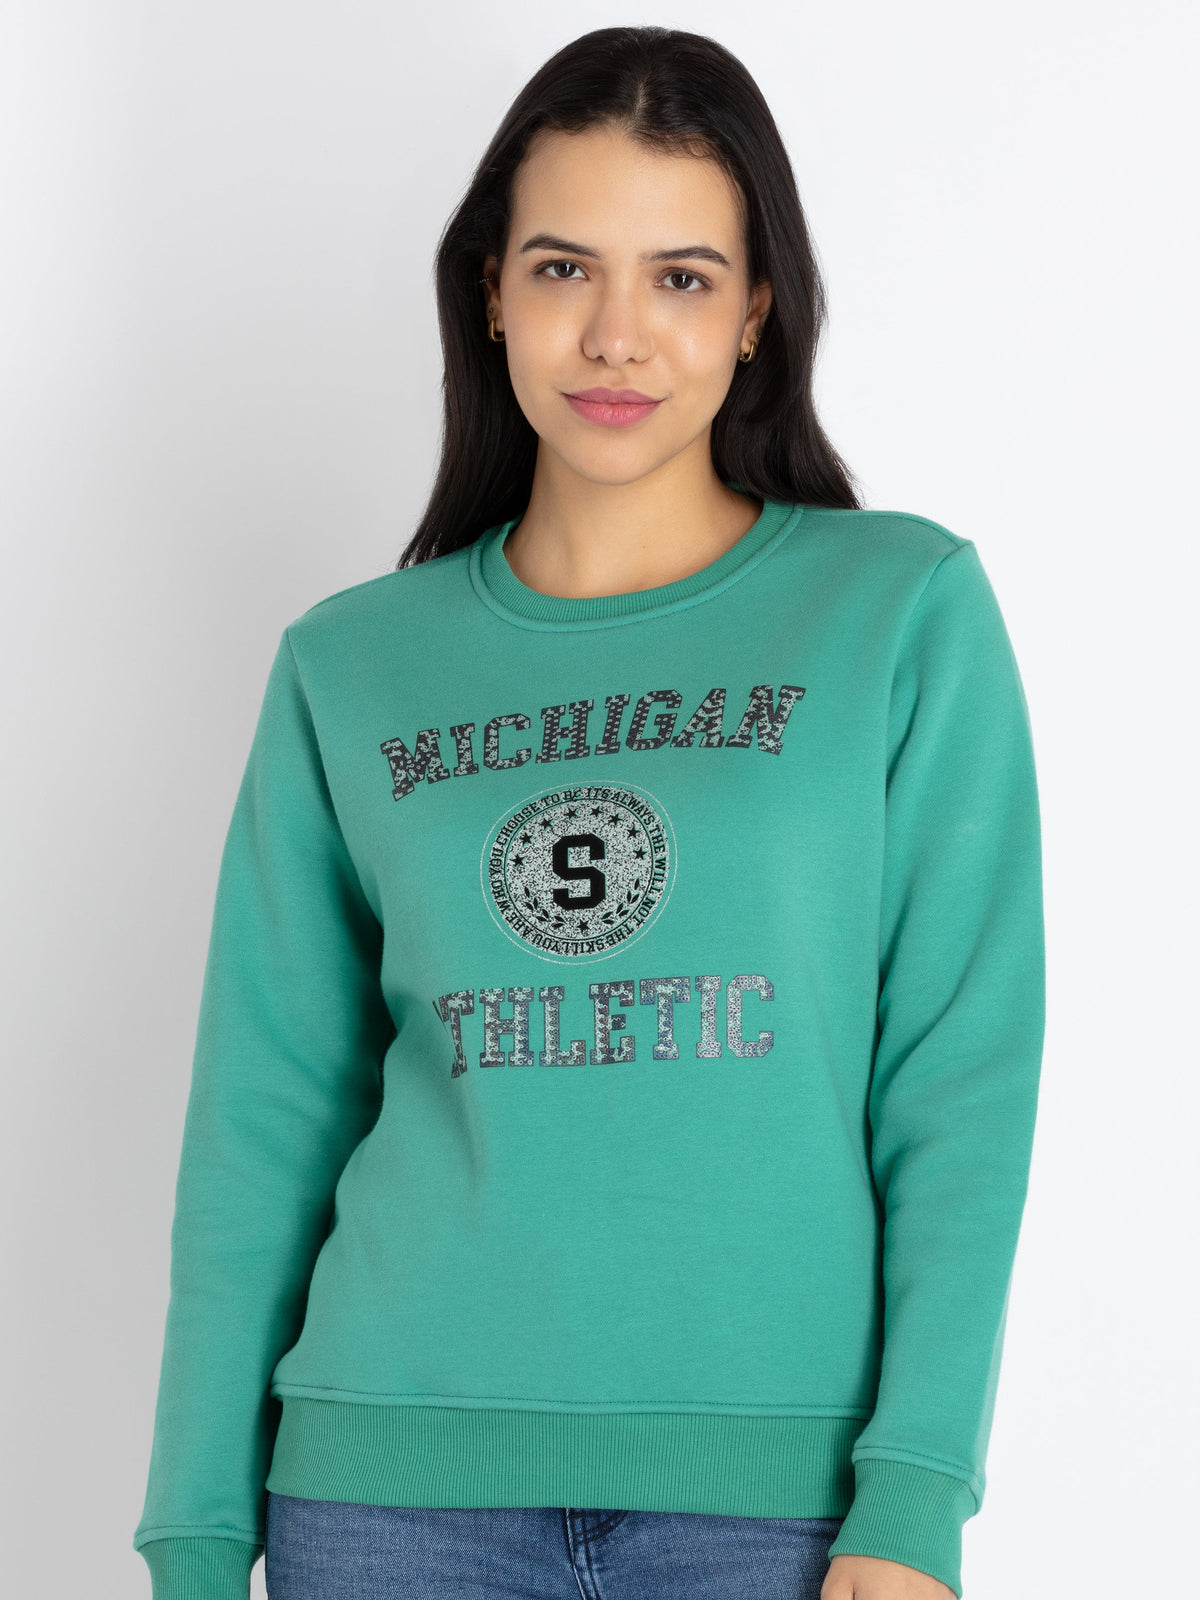 stylish sweatshirts for women